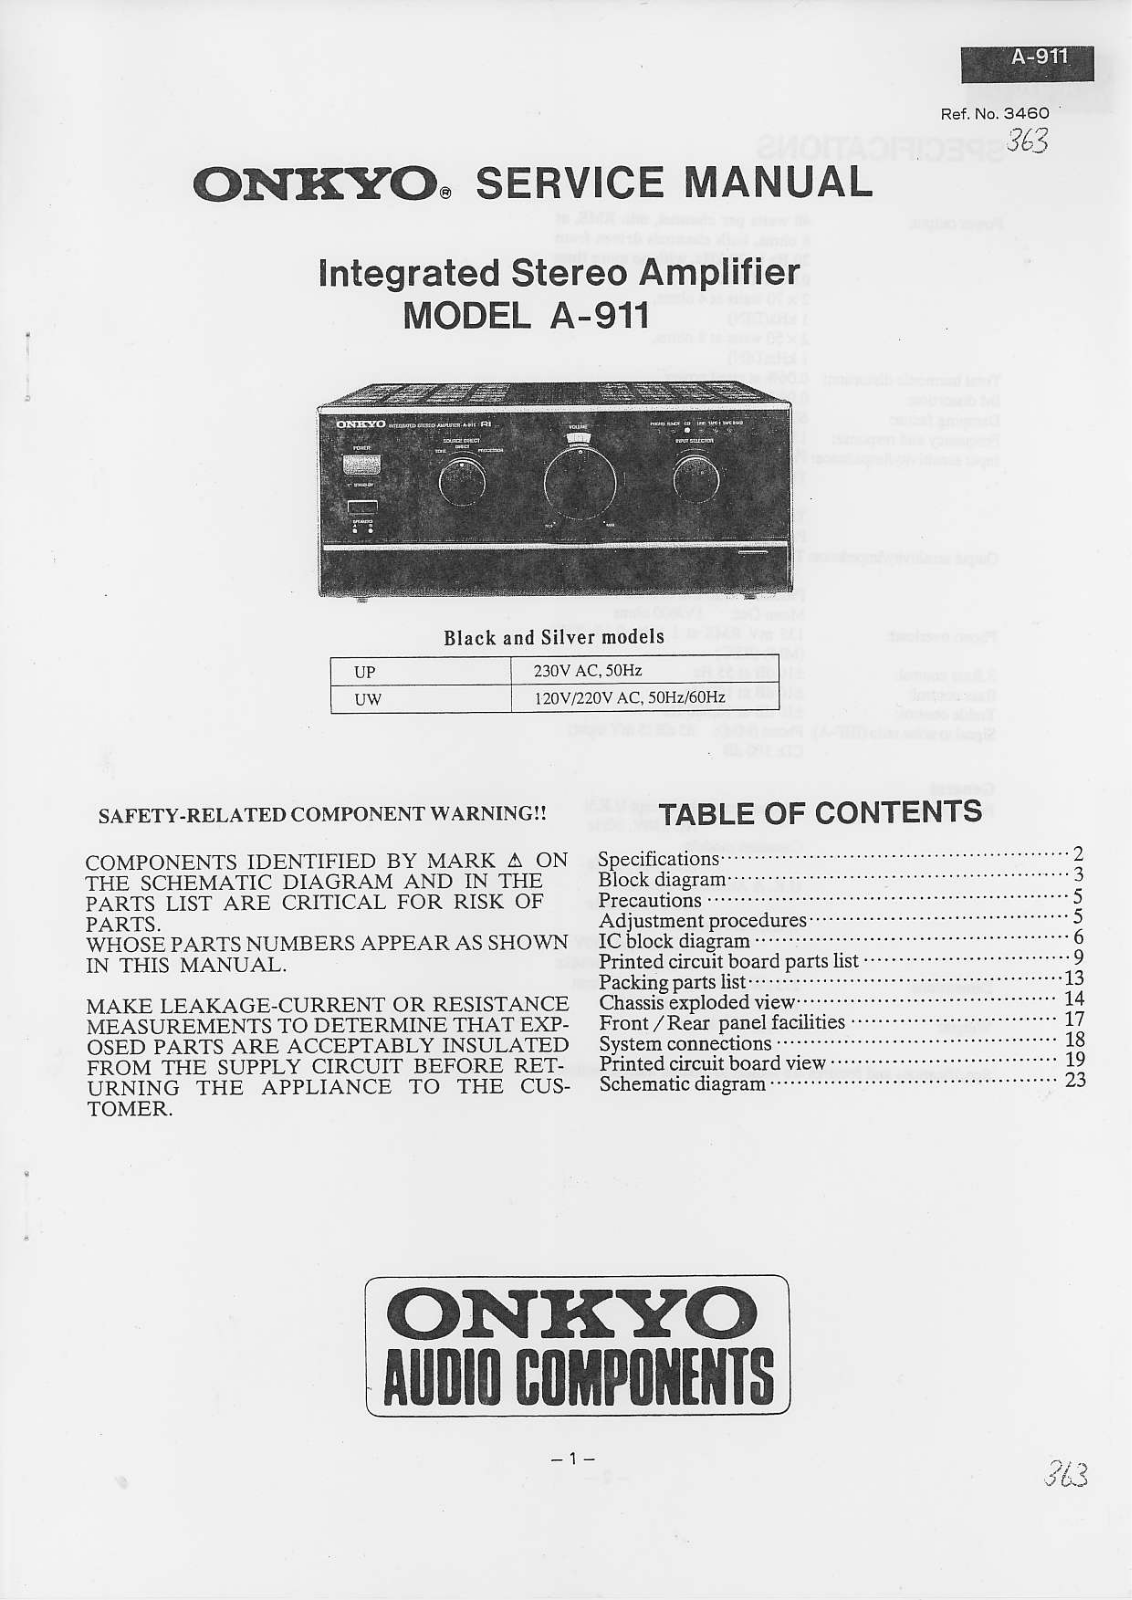 Onkyo A-911 Service Manual